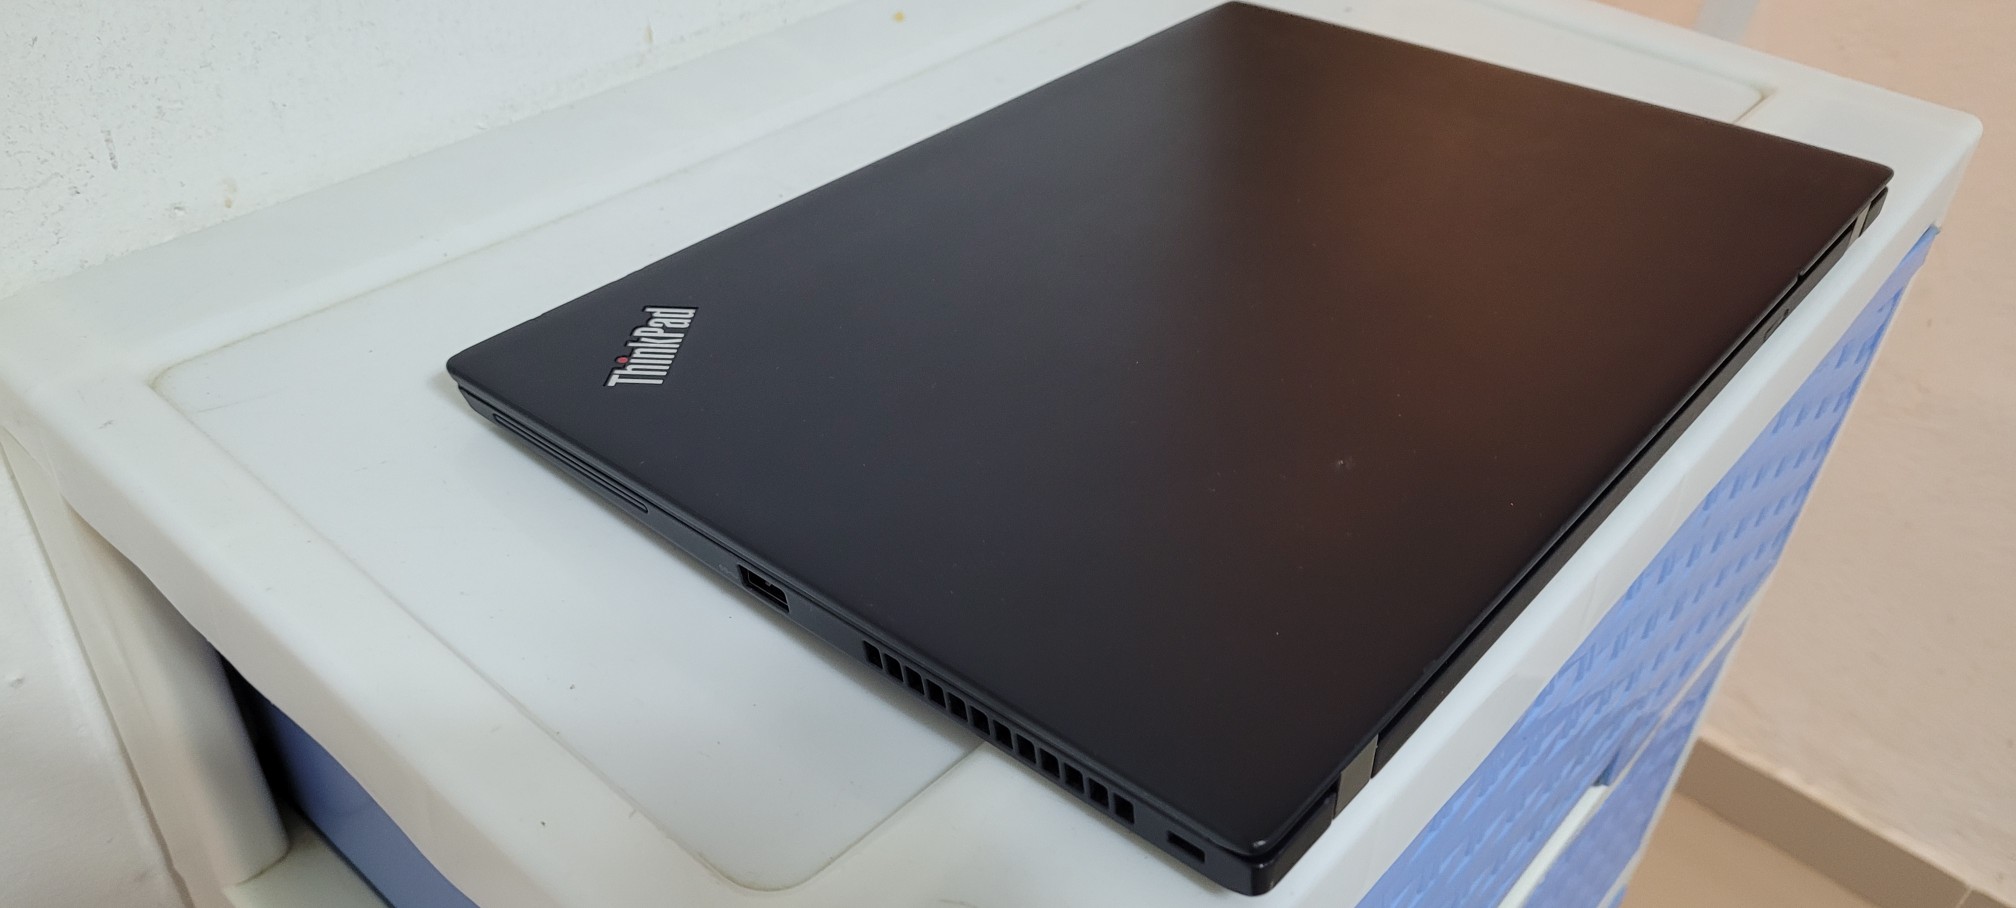 computadoras y laptops - Lenovo T480 14 Pulg Core i5 8va Gen Ram 8gb ddr4 Disco 256gb SSD HDMI 2